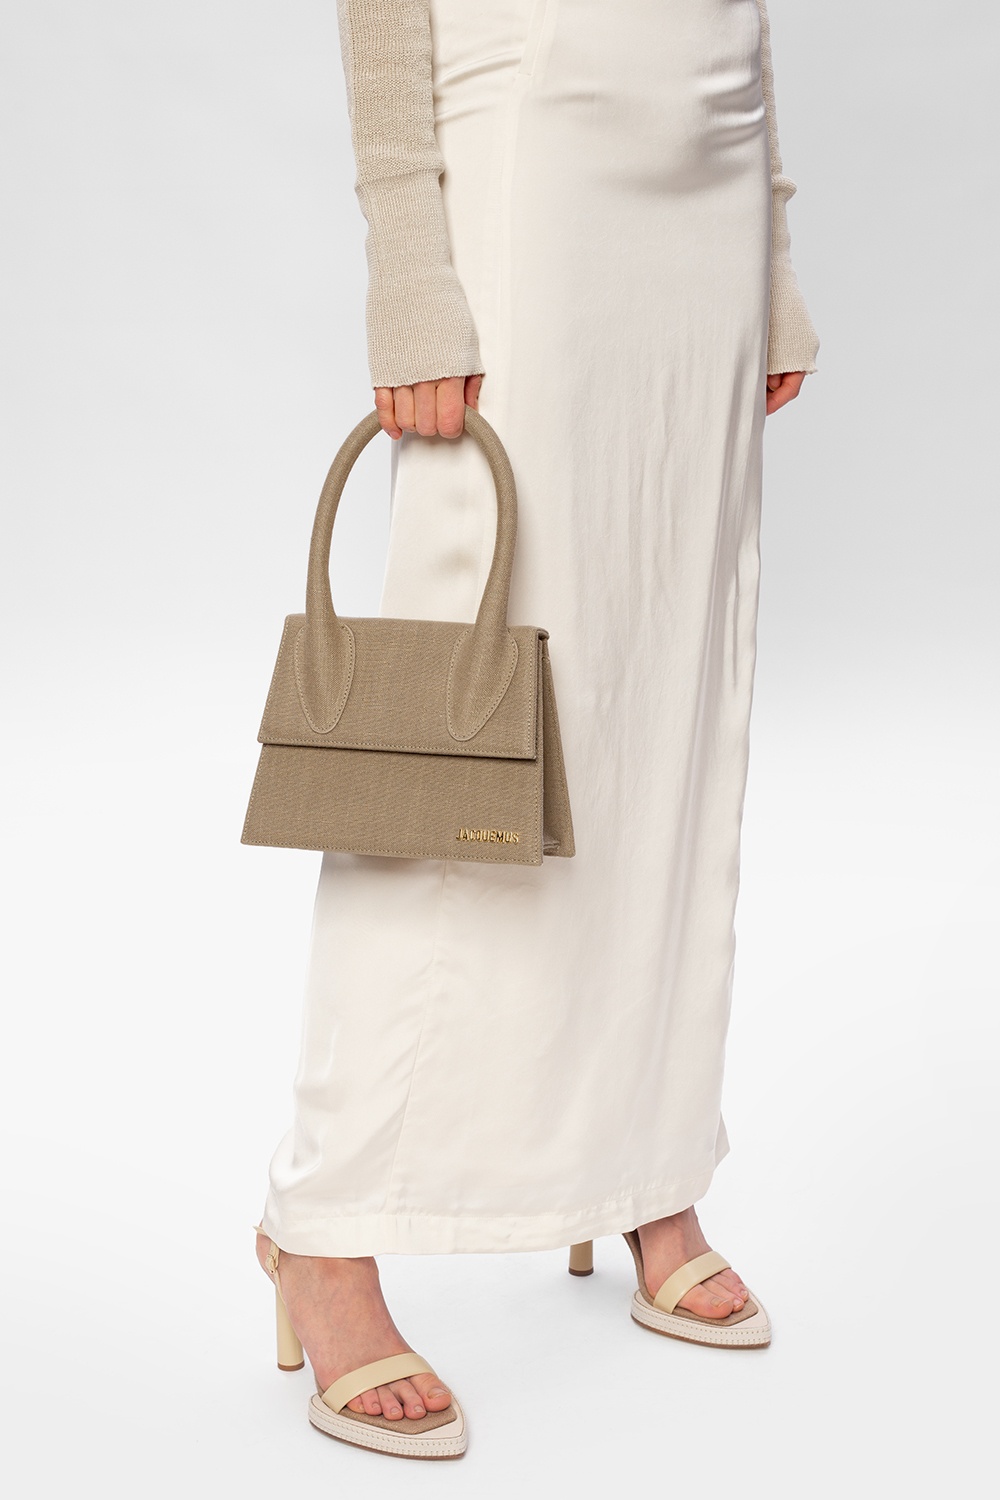 Luxury handbag - Le Grand Chiquito Jacquemus bag in white leather